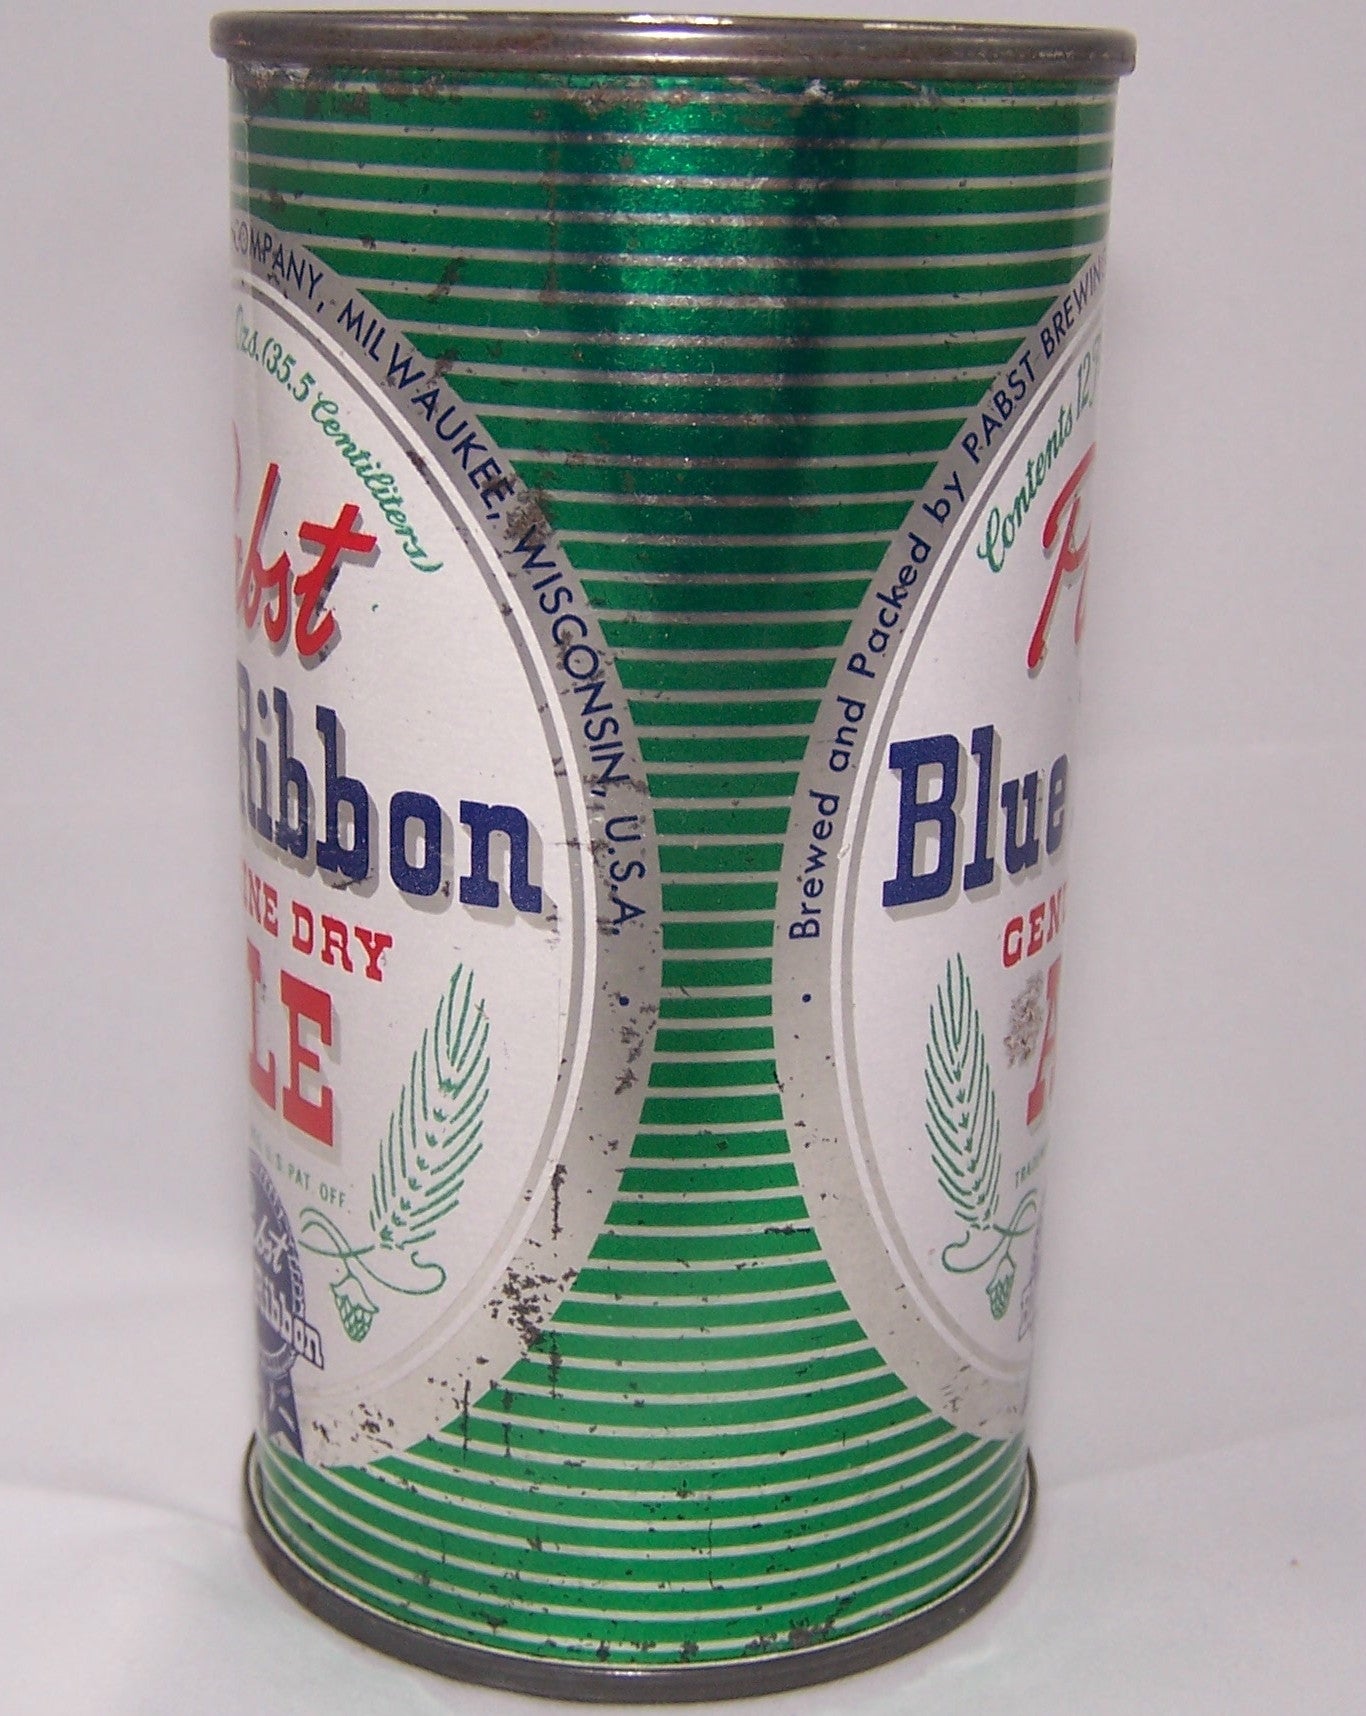 Pabst Blue Ribbon Genuine Ale, USBC 111-2, Grade 1/1-11/28/15